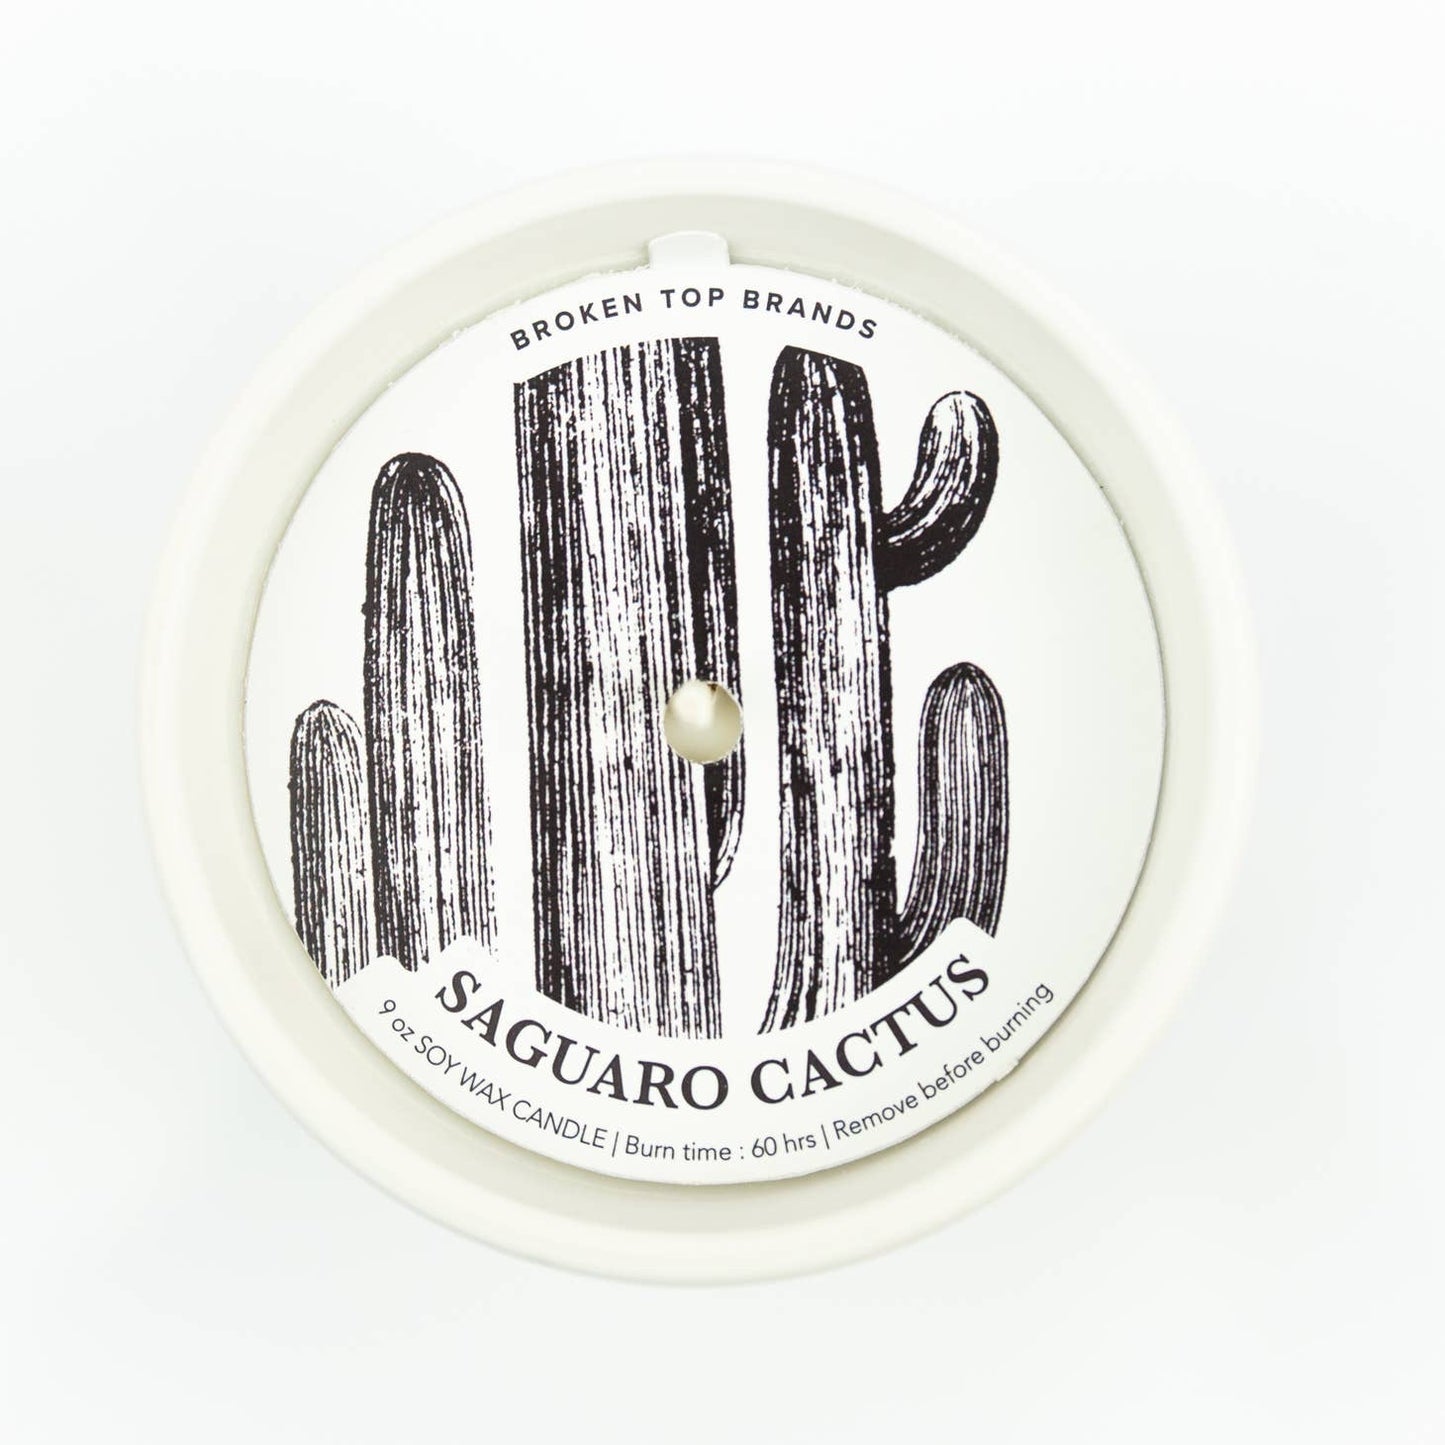 Ceramic Botanical Soy Candle - Saguaro Cactus - 10 oz